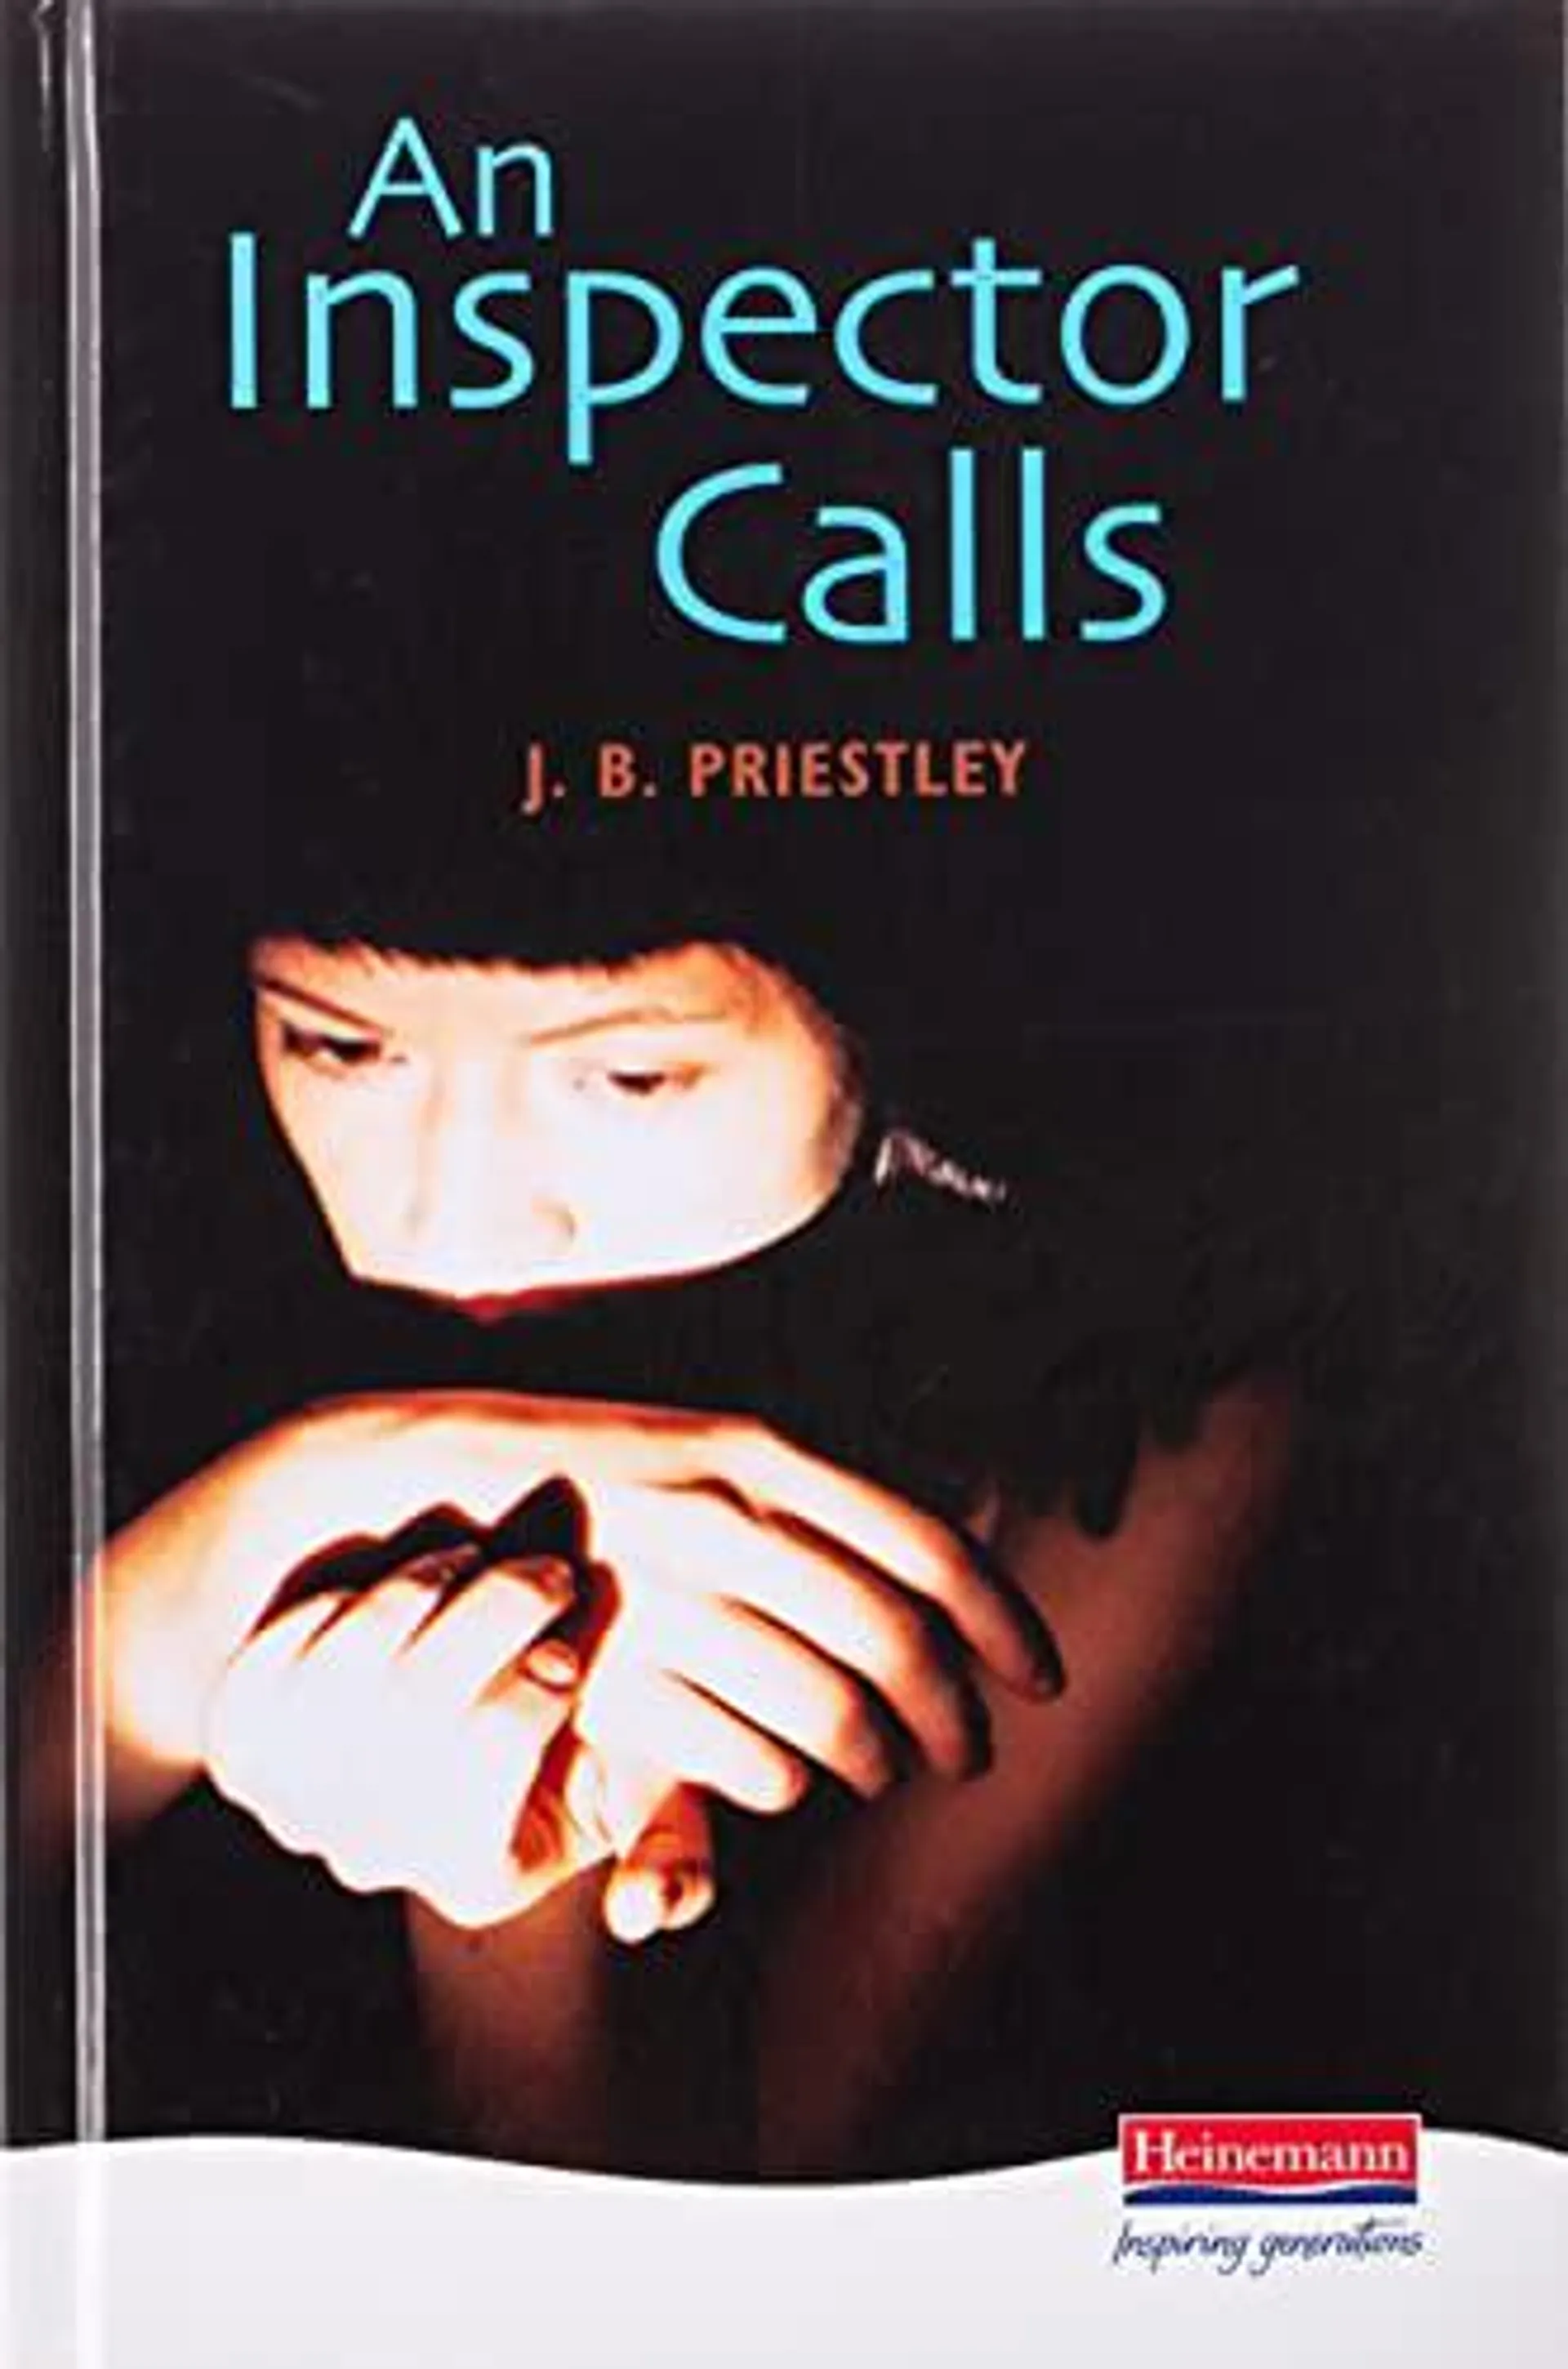 An Inspector Calls by J.B Priestley